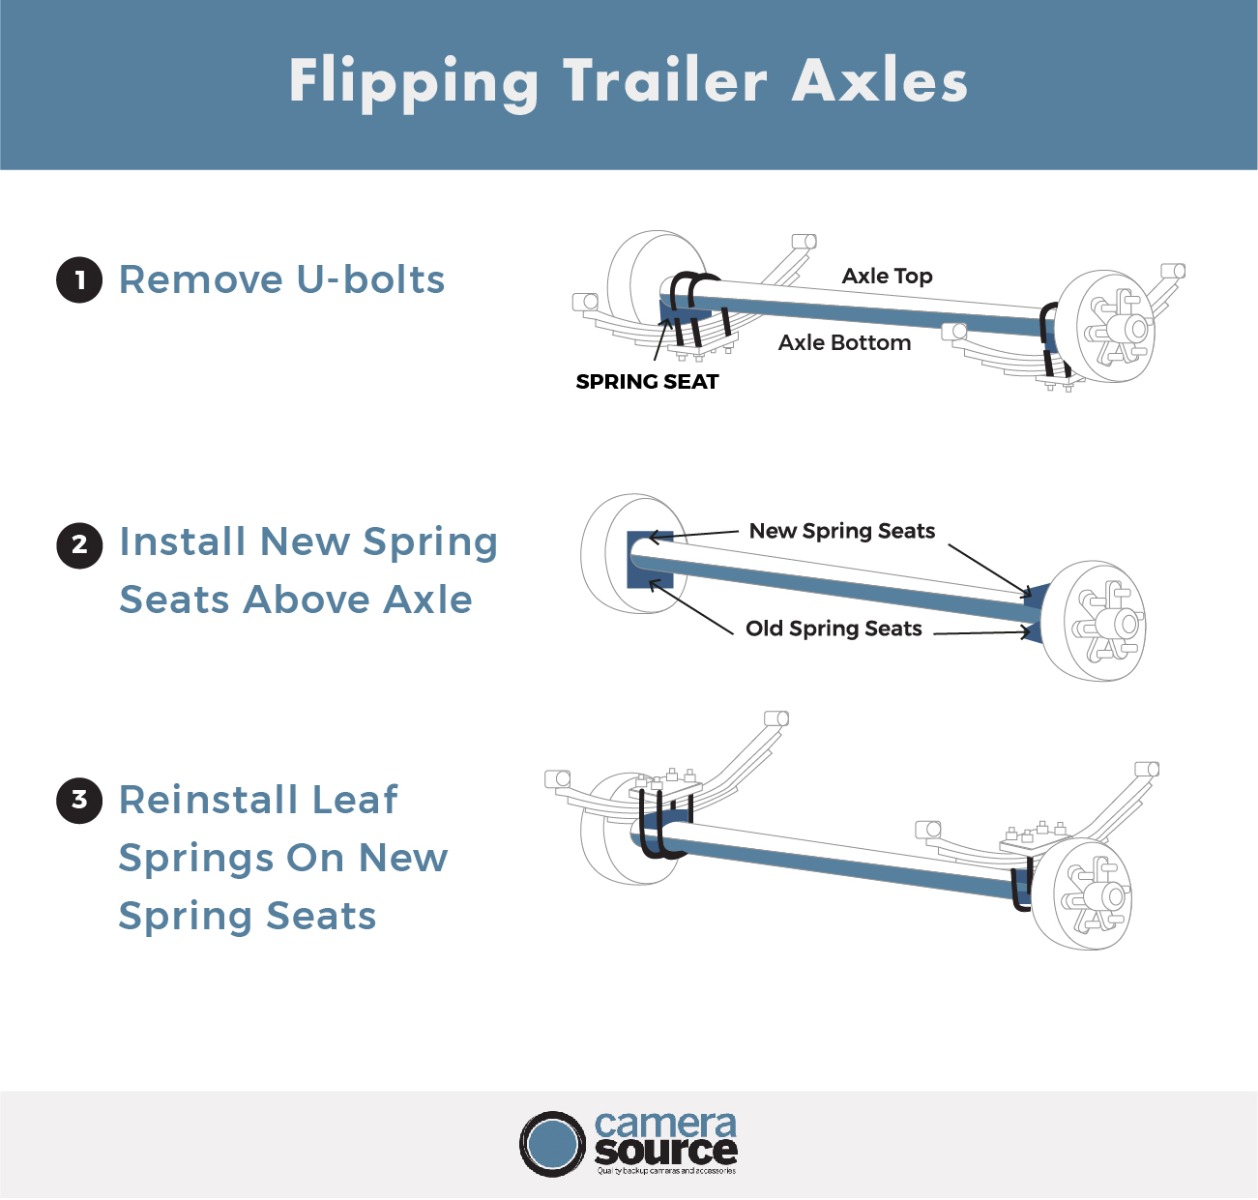 Flipping Trailer Axles